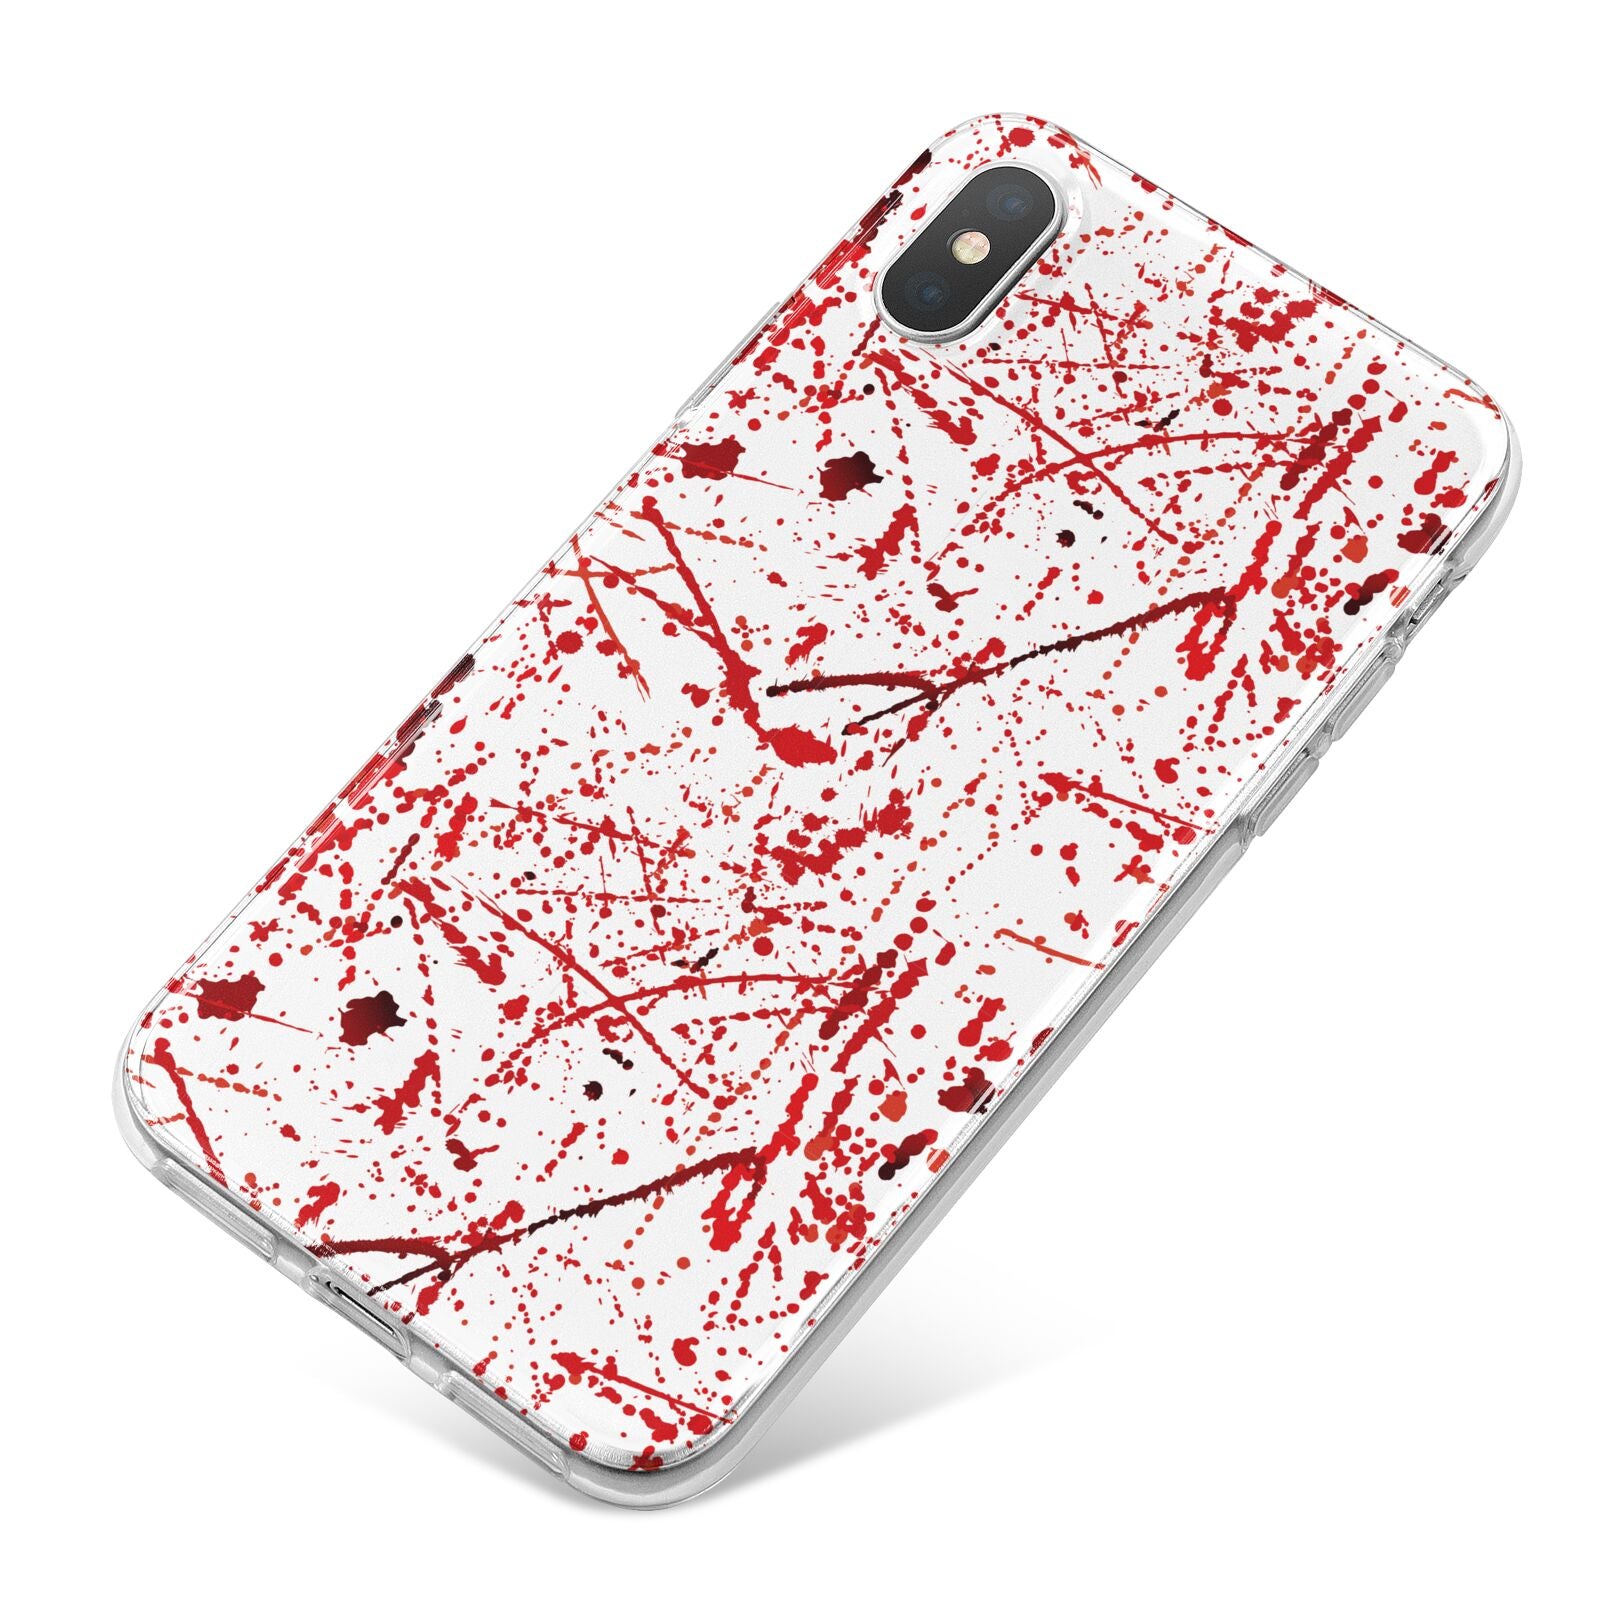 Blood Splatter iPhone X Bumper Case on Silver iPhone